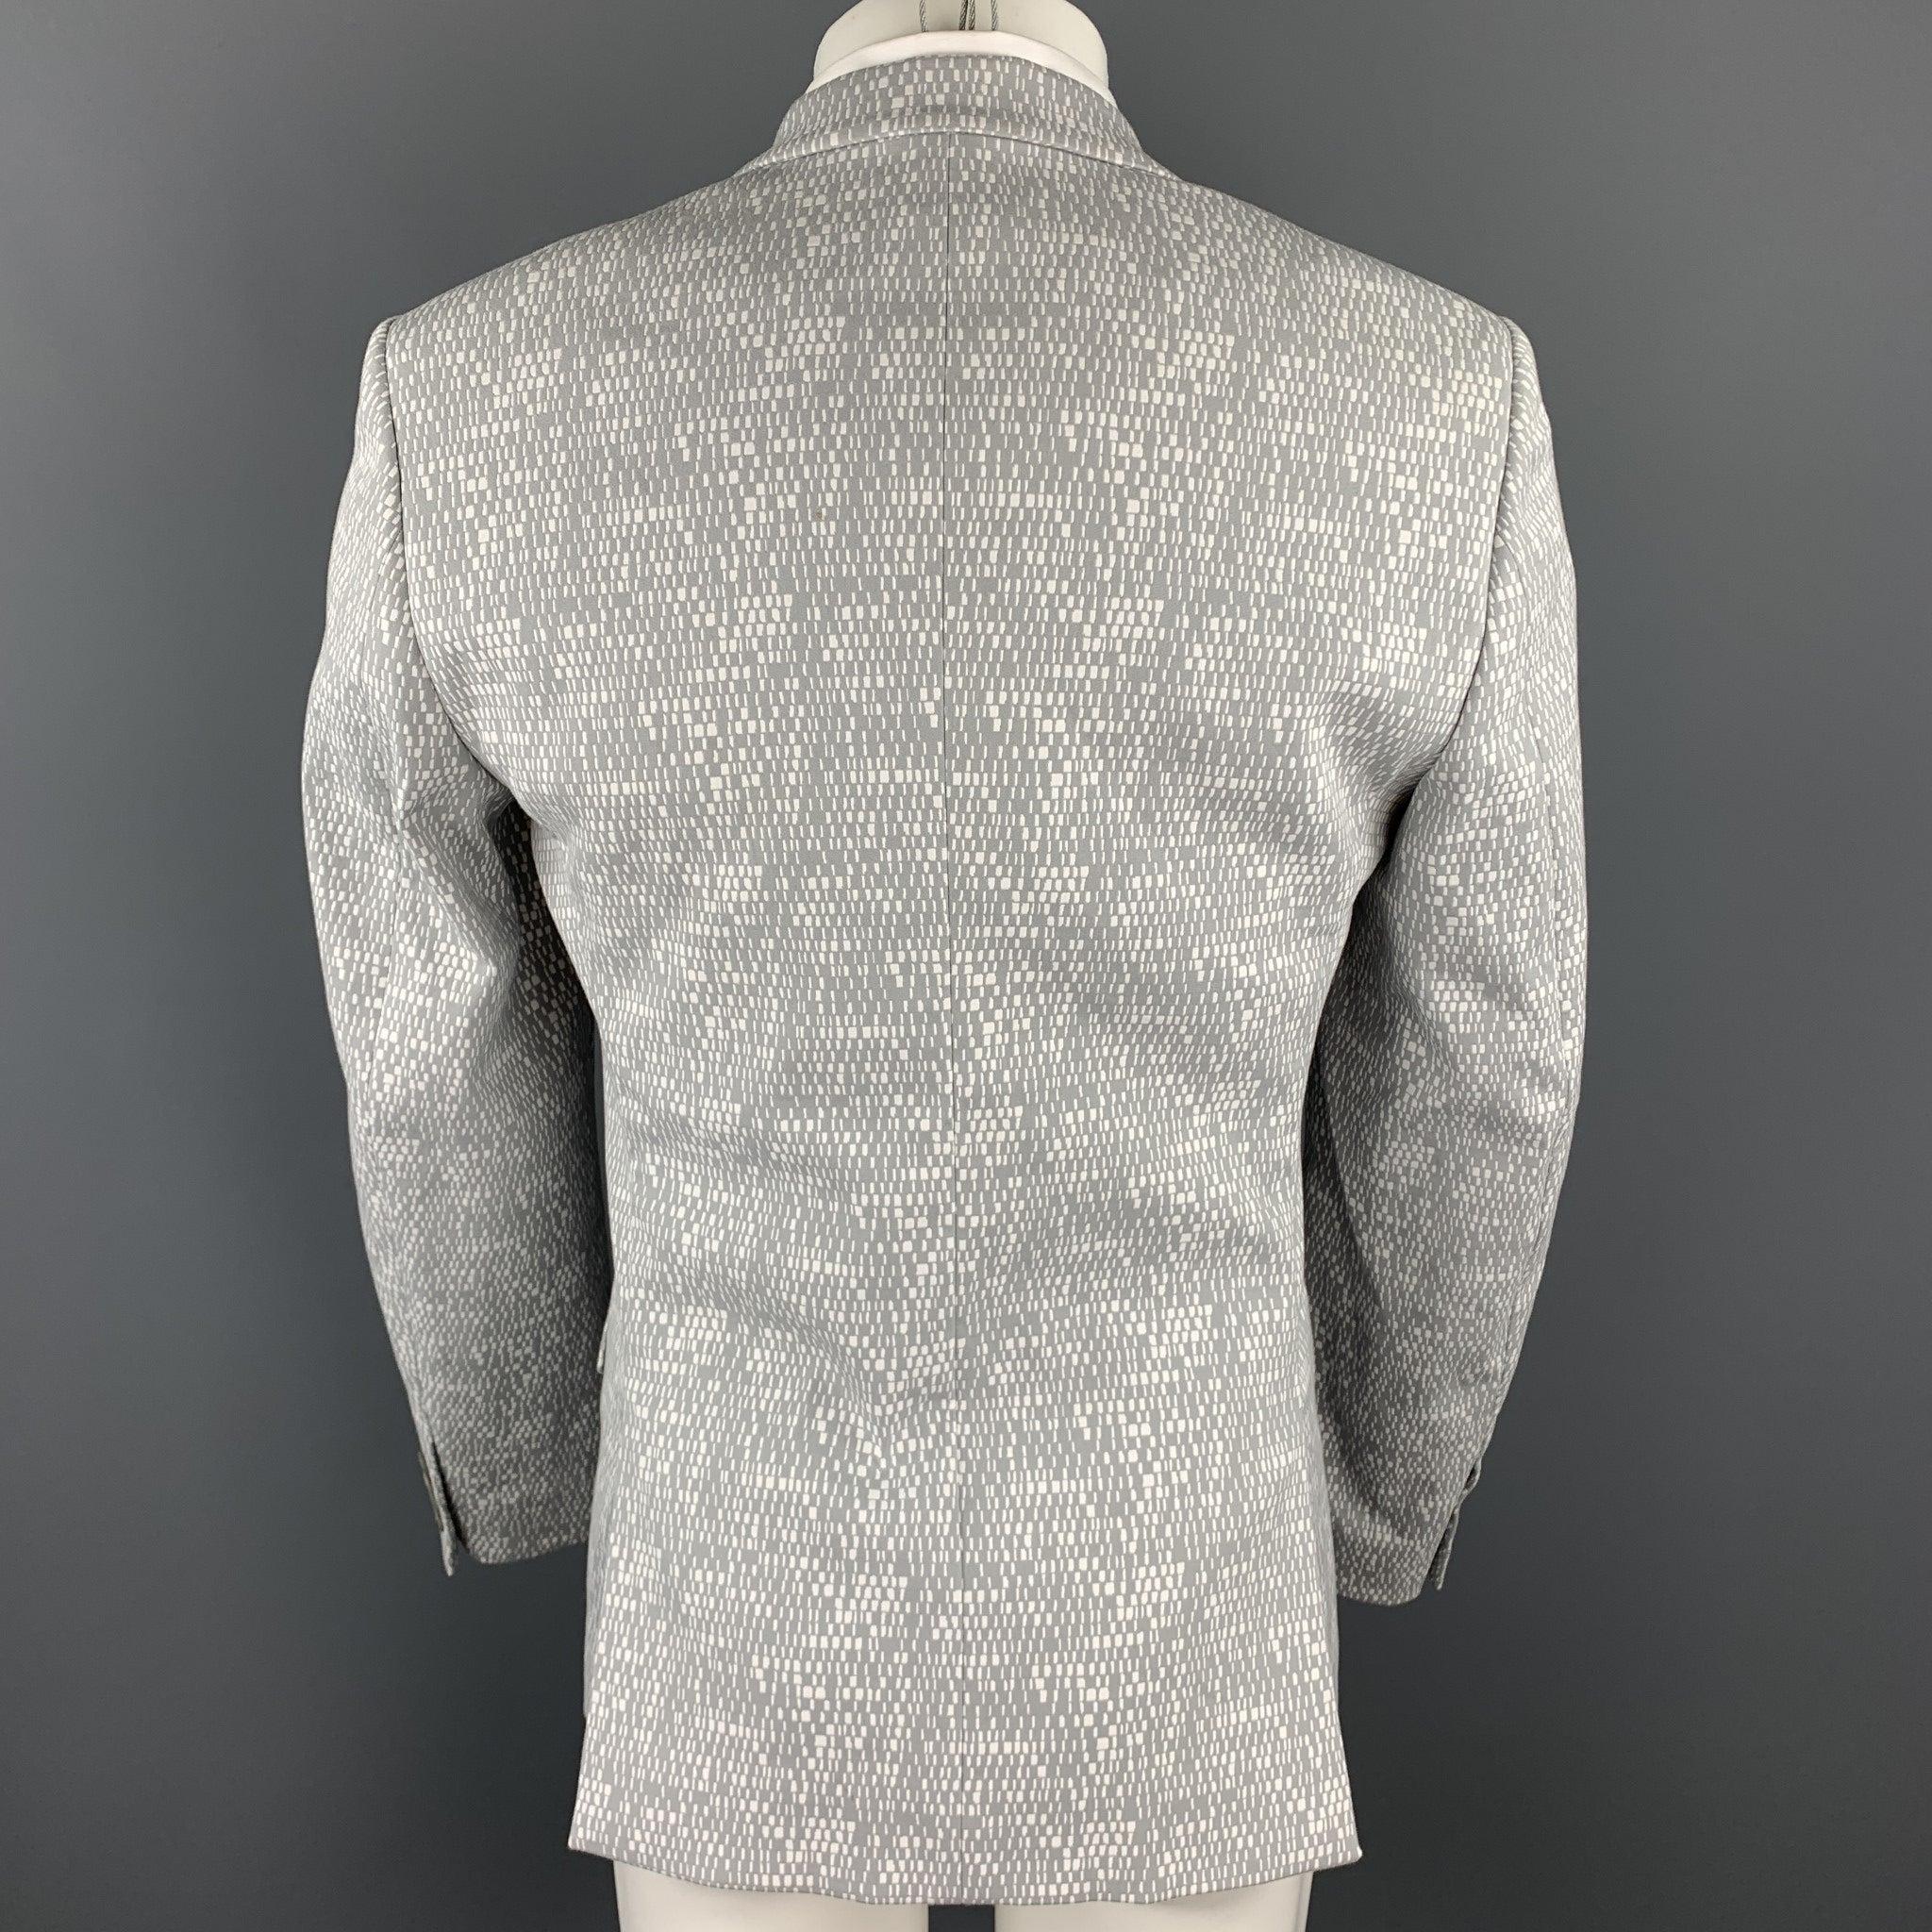 CALVIN KLEIN COLLECTION Size 36 Grey & White Woven Notch Lapel Sport Coat For Sale 1